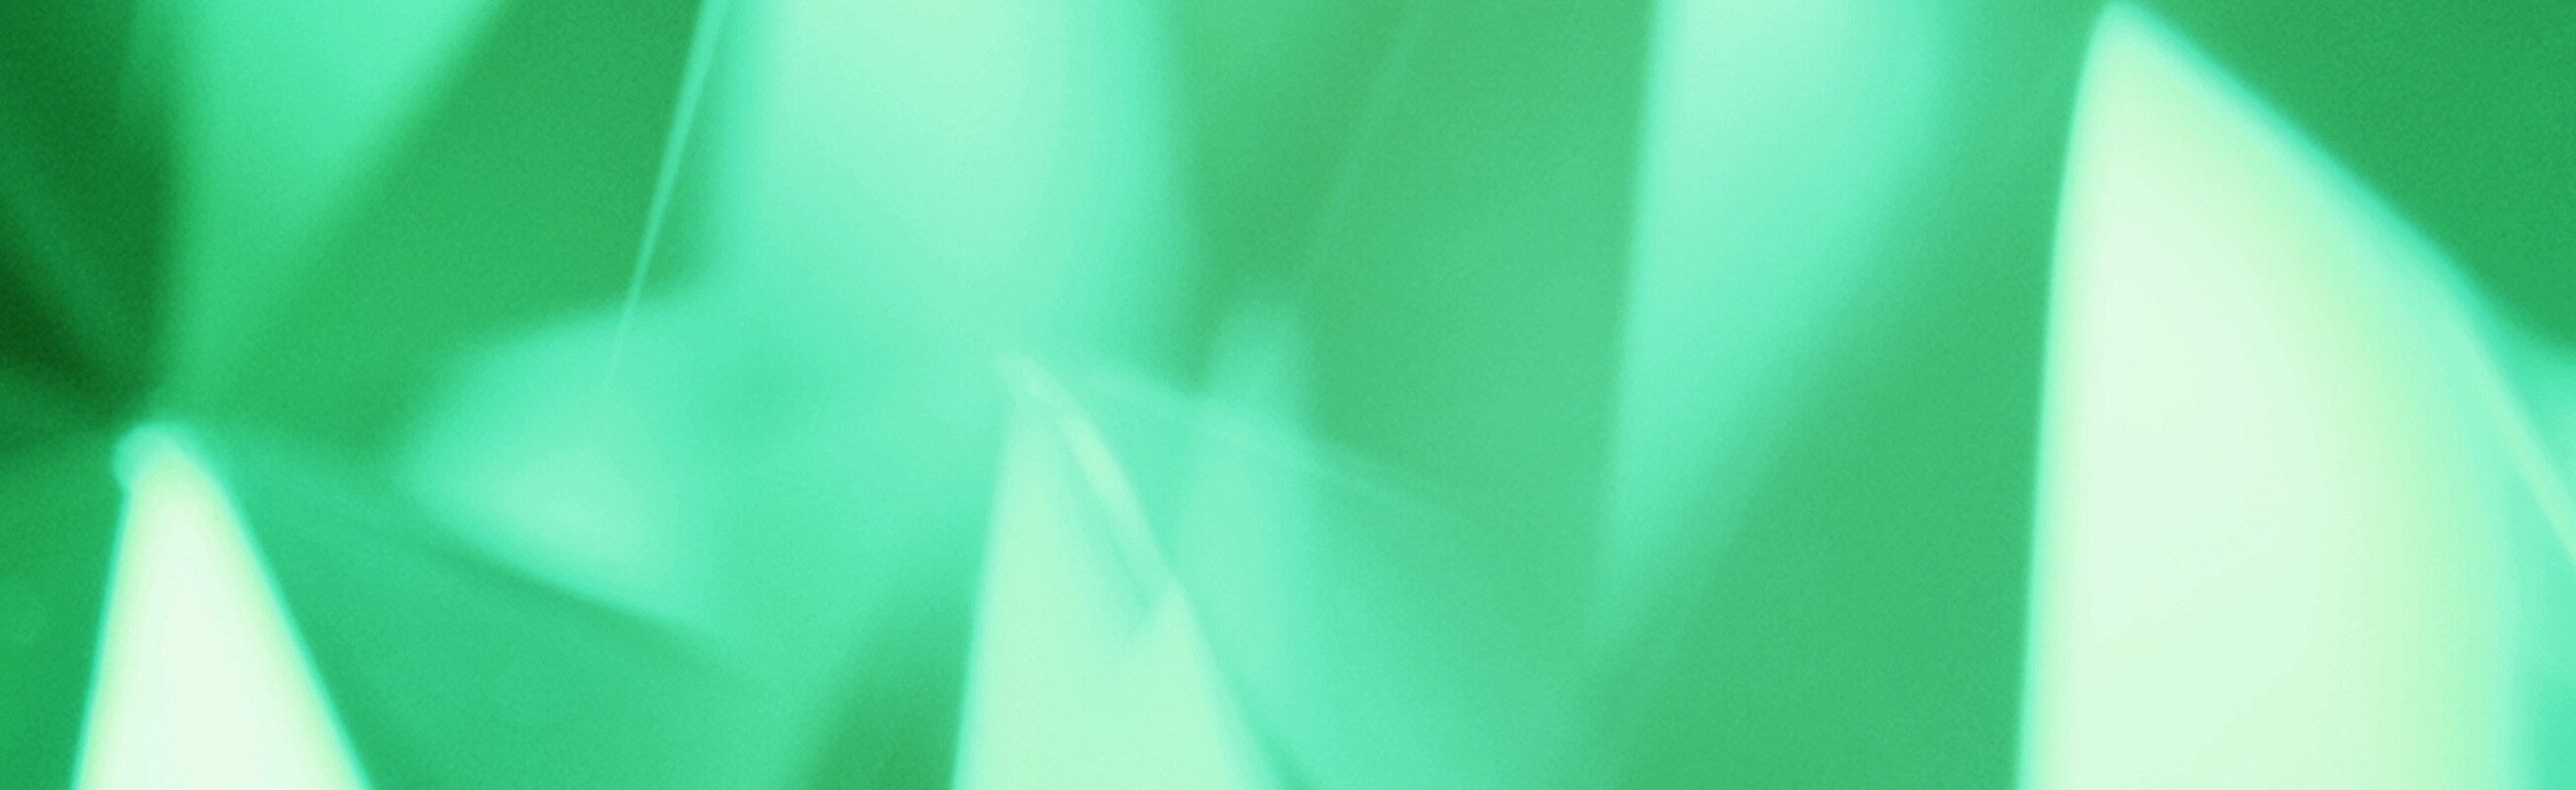 Green gemstone background slowly spinning